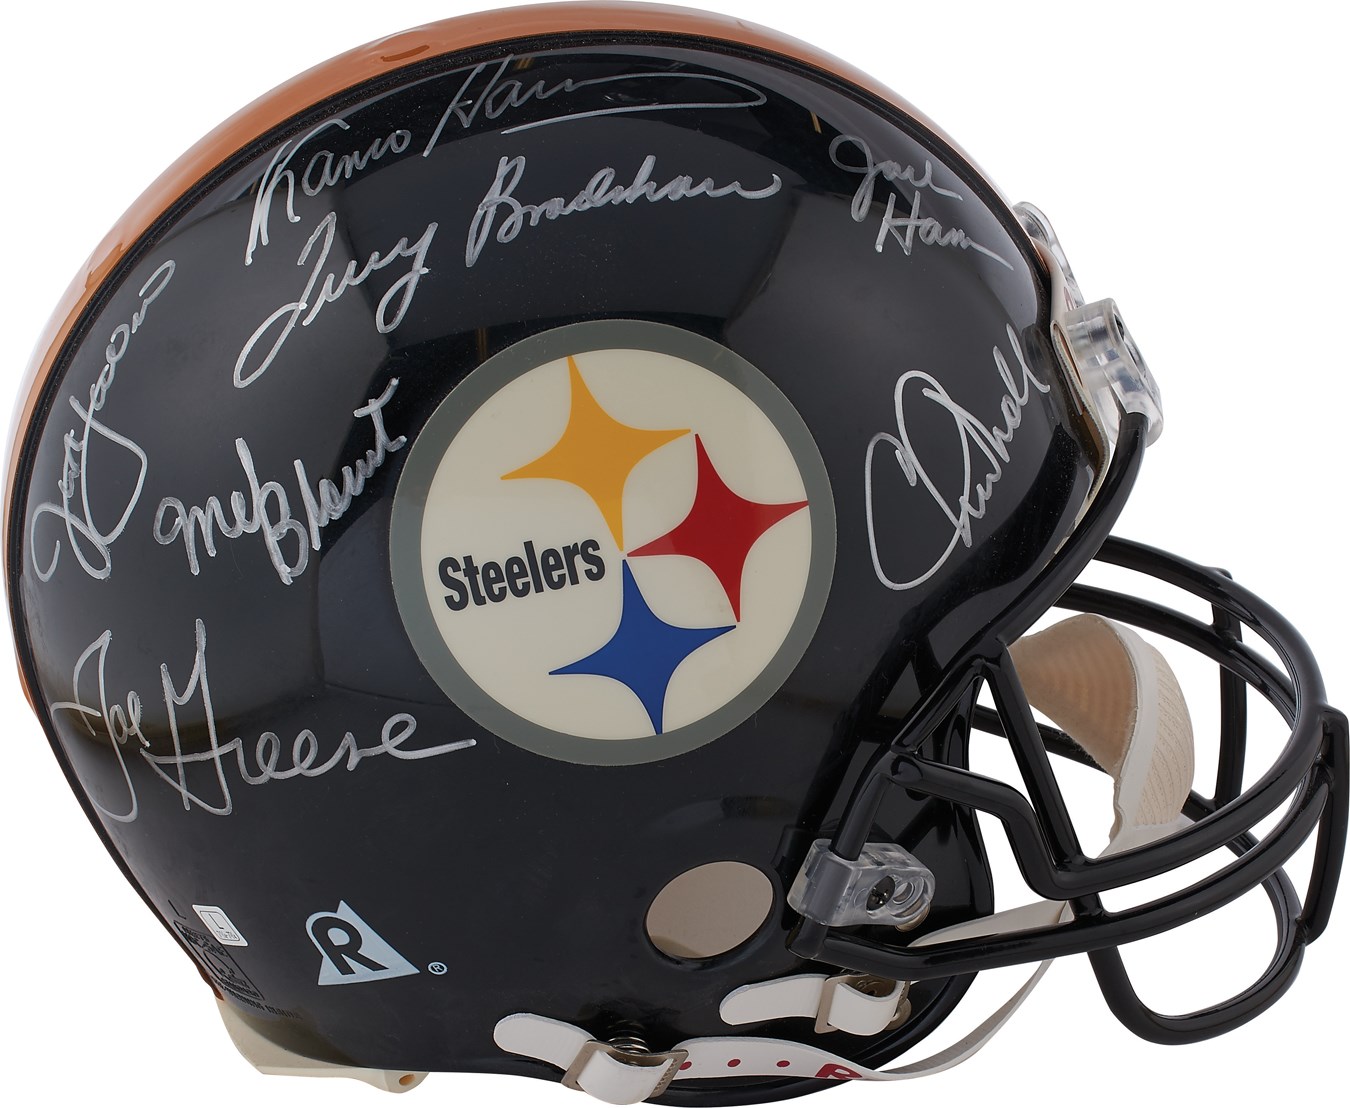 Pittsburgh Steelers Hall of Famers Signed Helmet & Lynn Swann Display